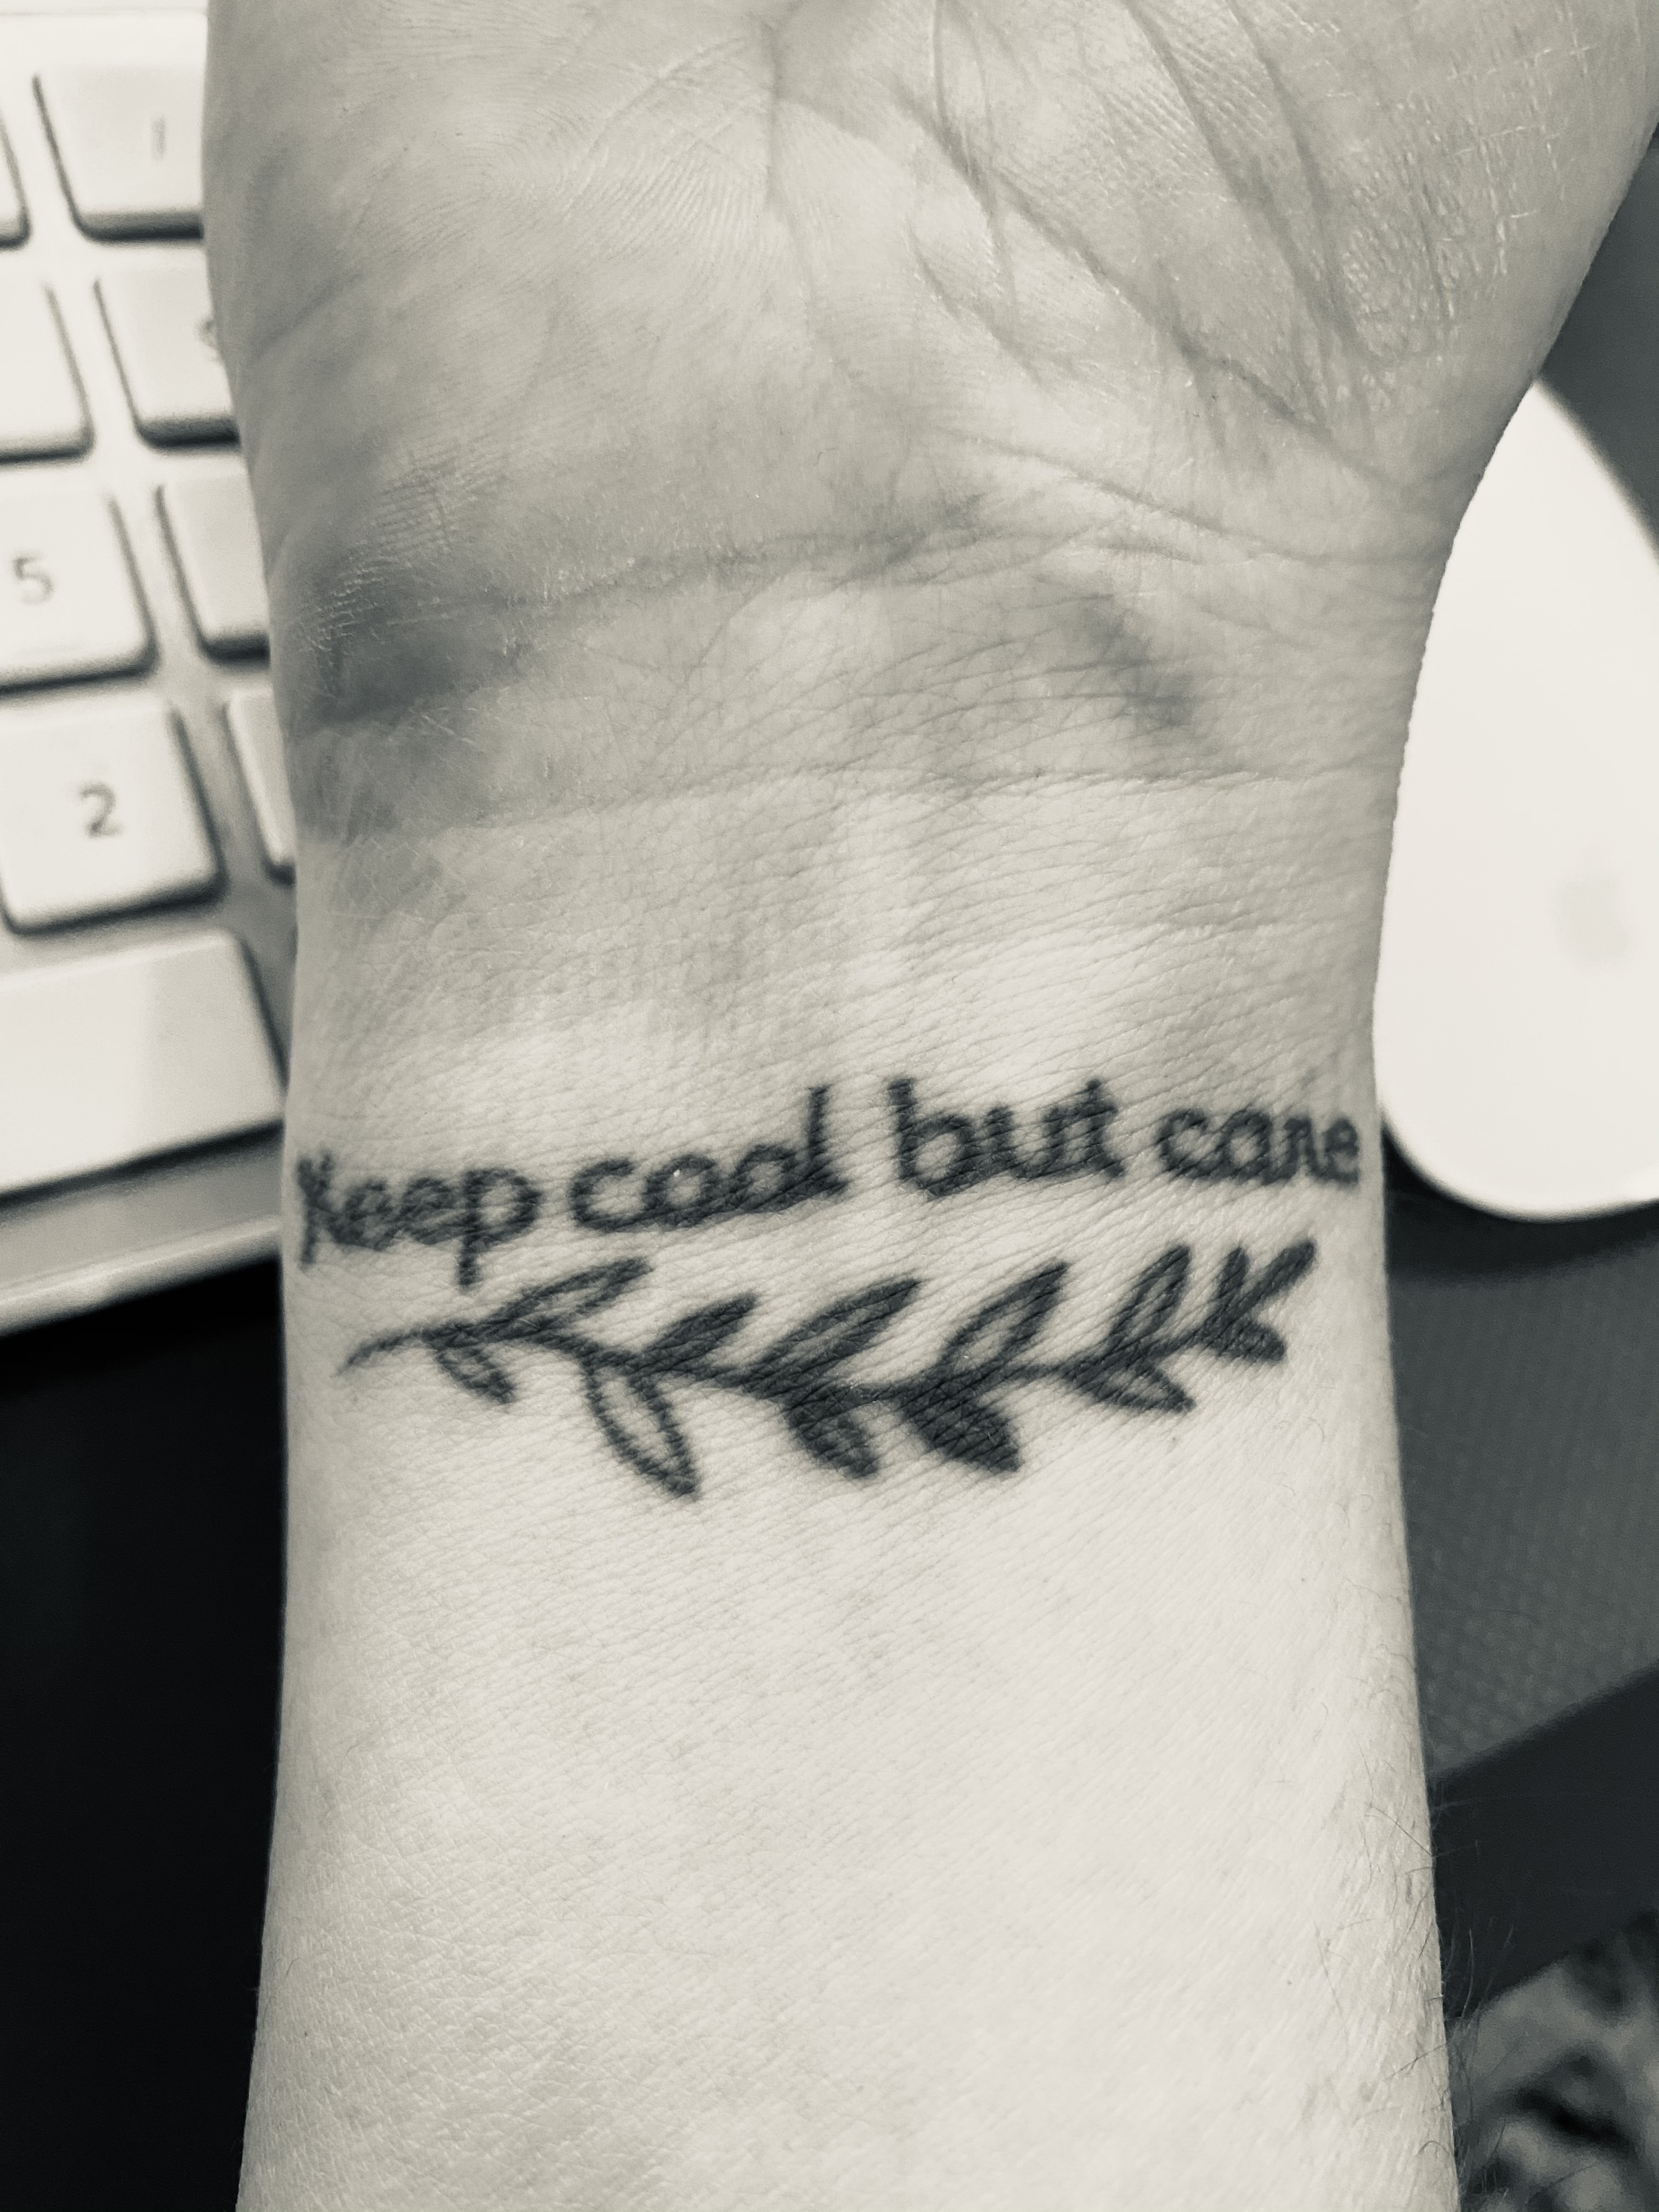 “Keep cool but care.” tattoo on wrist